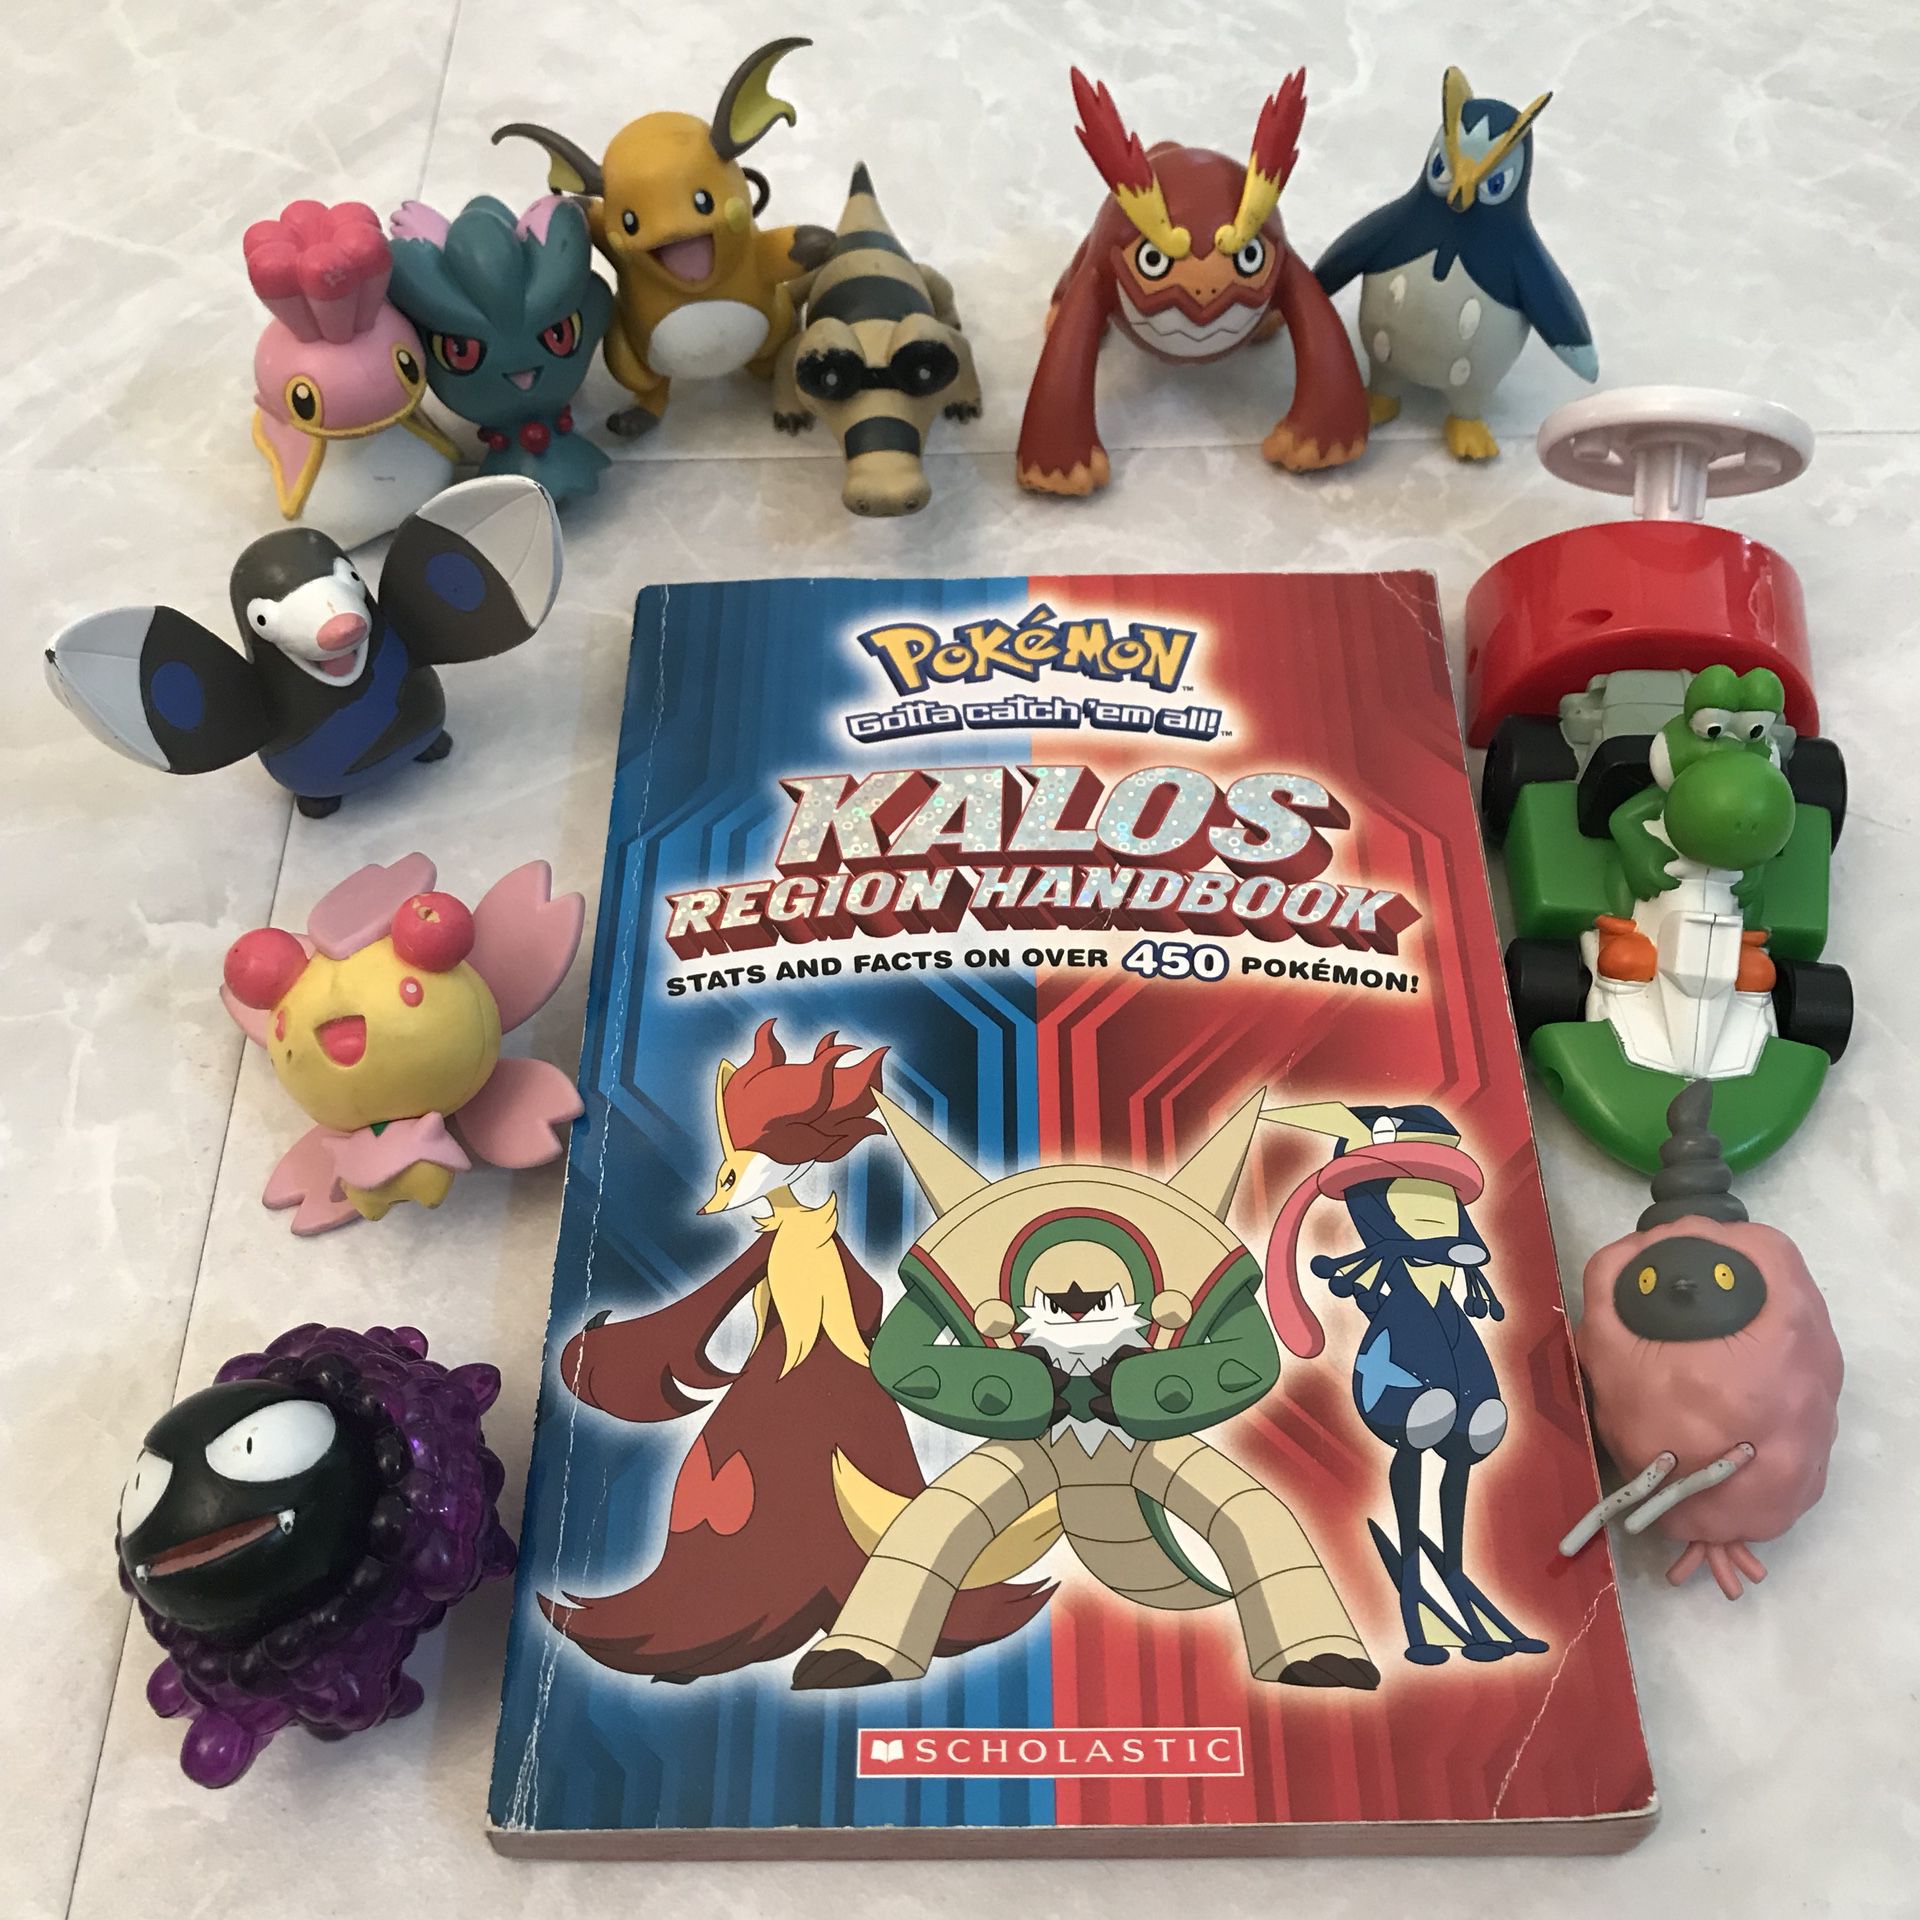 Pokemon kalos book and figures figurines